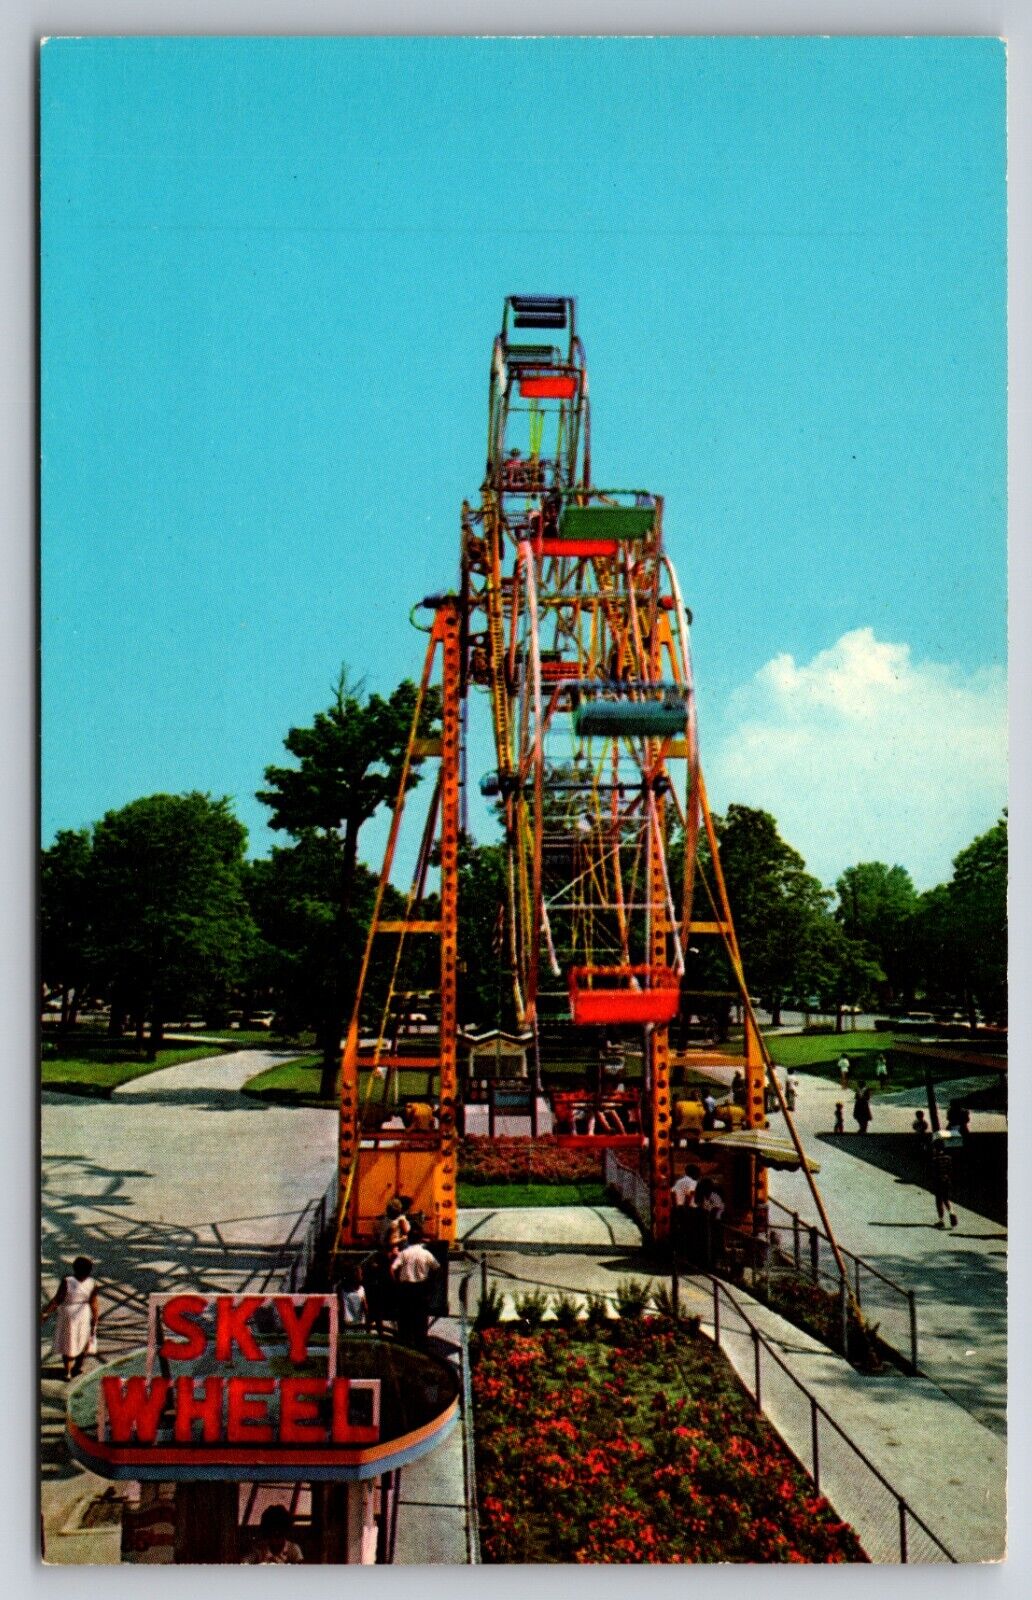 Giant Sky Wheel Ferris Wheel Cedar Point Sandusky Ohio c1950 Postcard